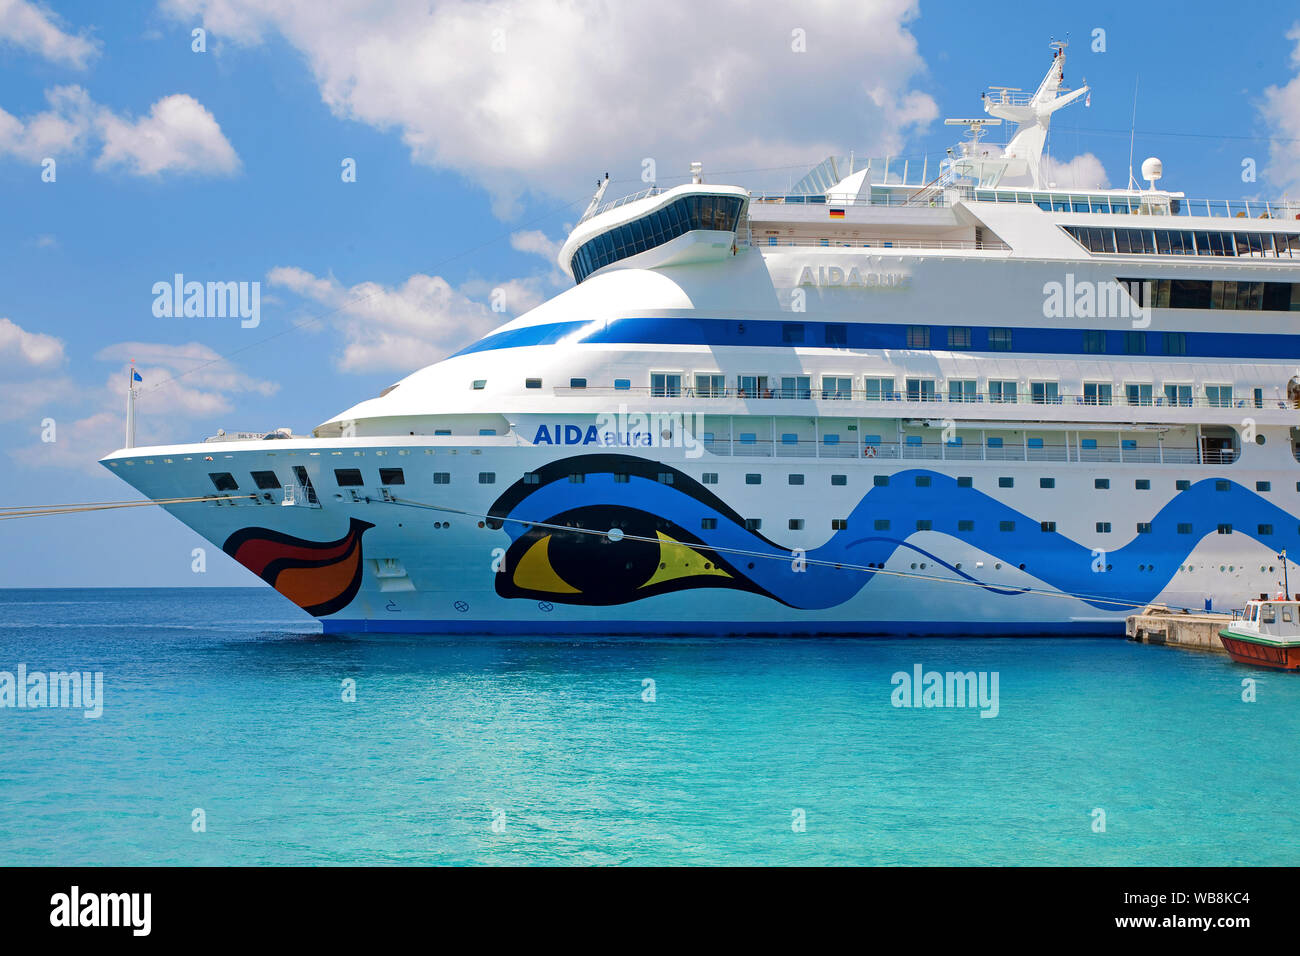 Cruising ship 'AIDA aura' at Kralendijk, Bonaire, Netherland Antilles Stock Photo